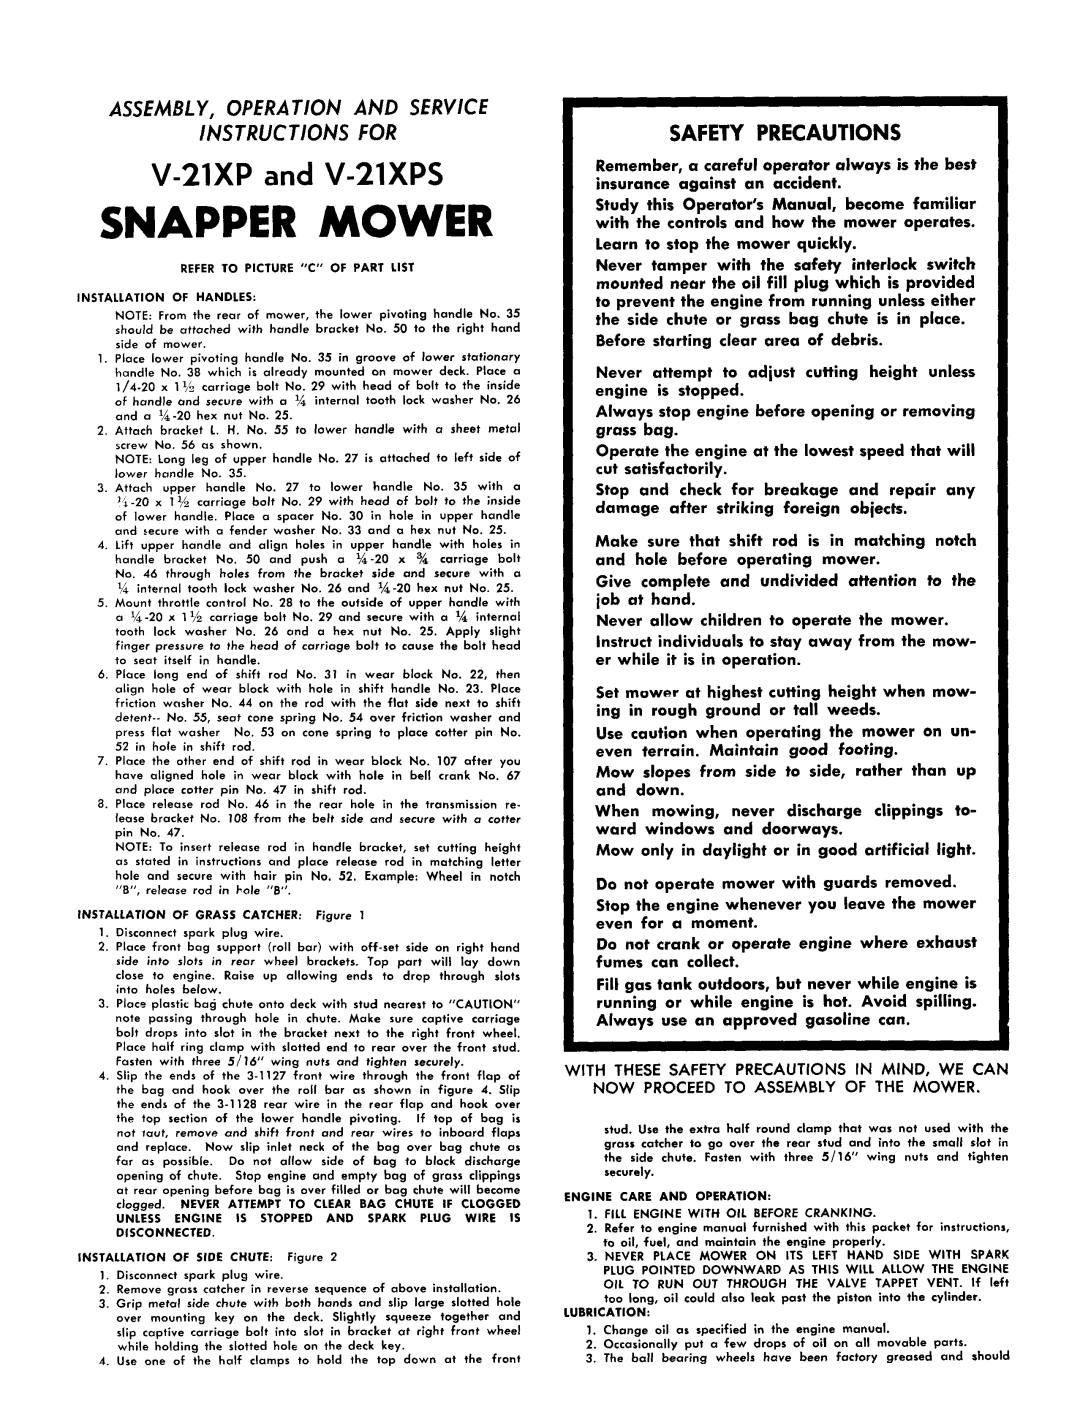 Snapper V-21XPS manual 